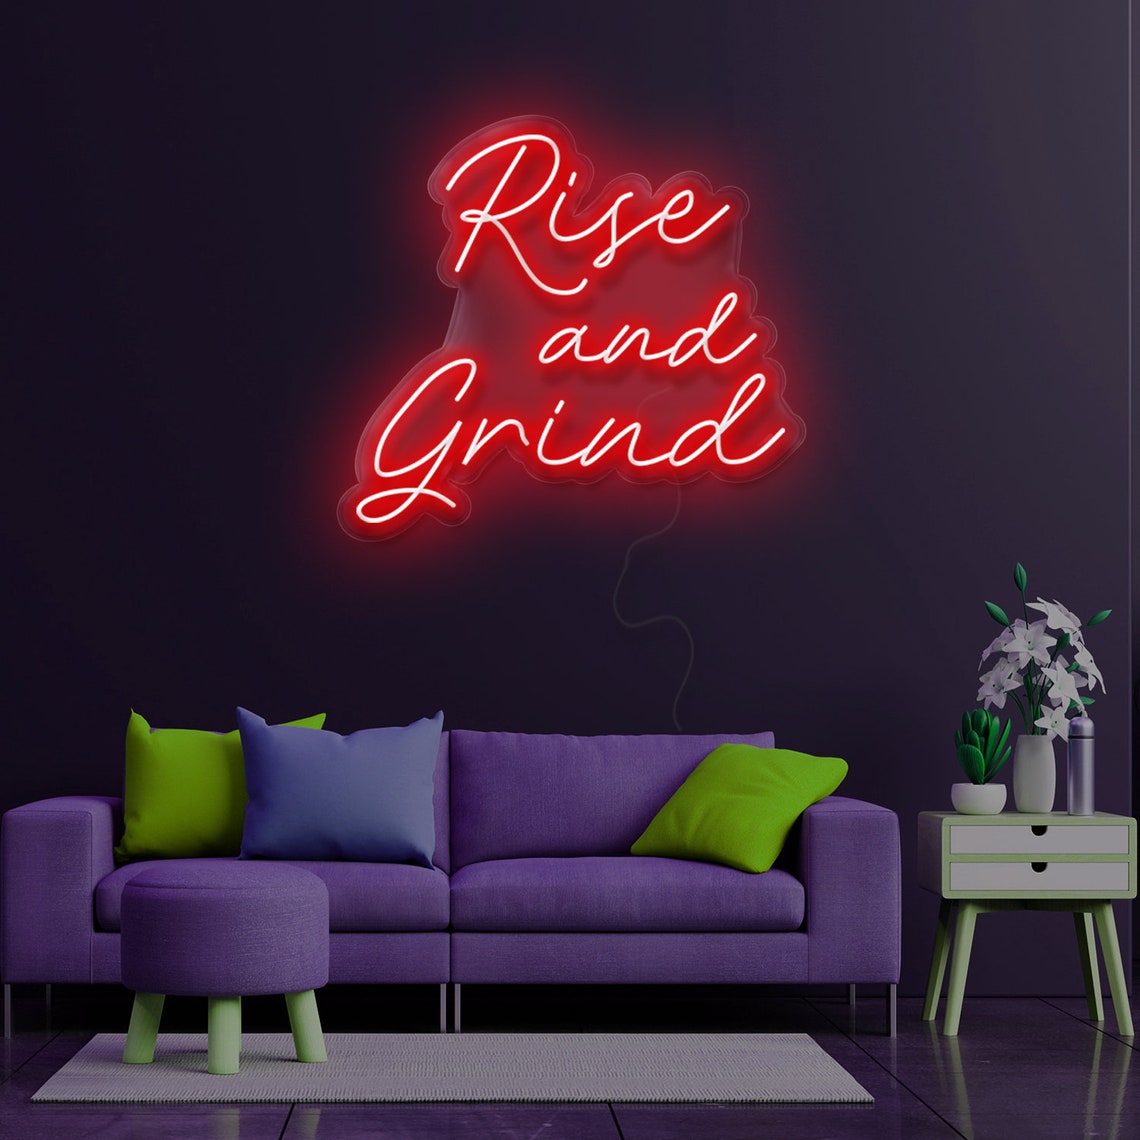 Grind And Hustle led neon bedroom decor sign